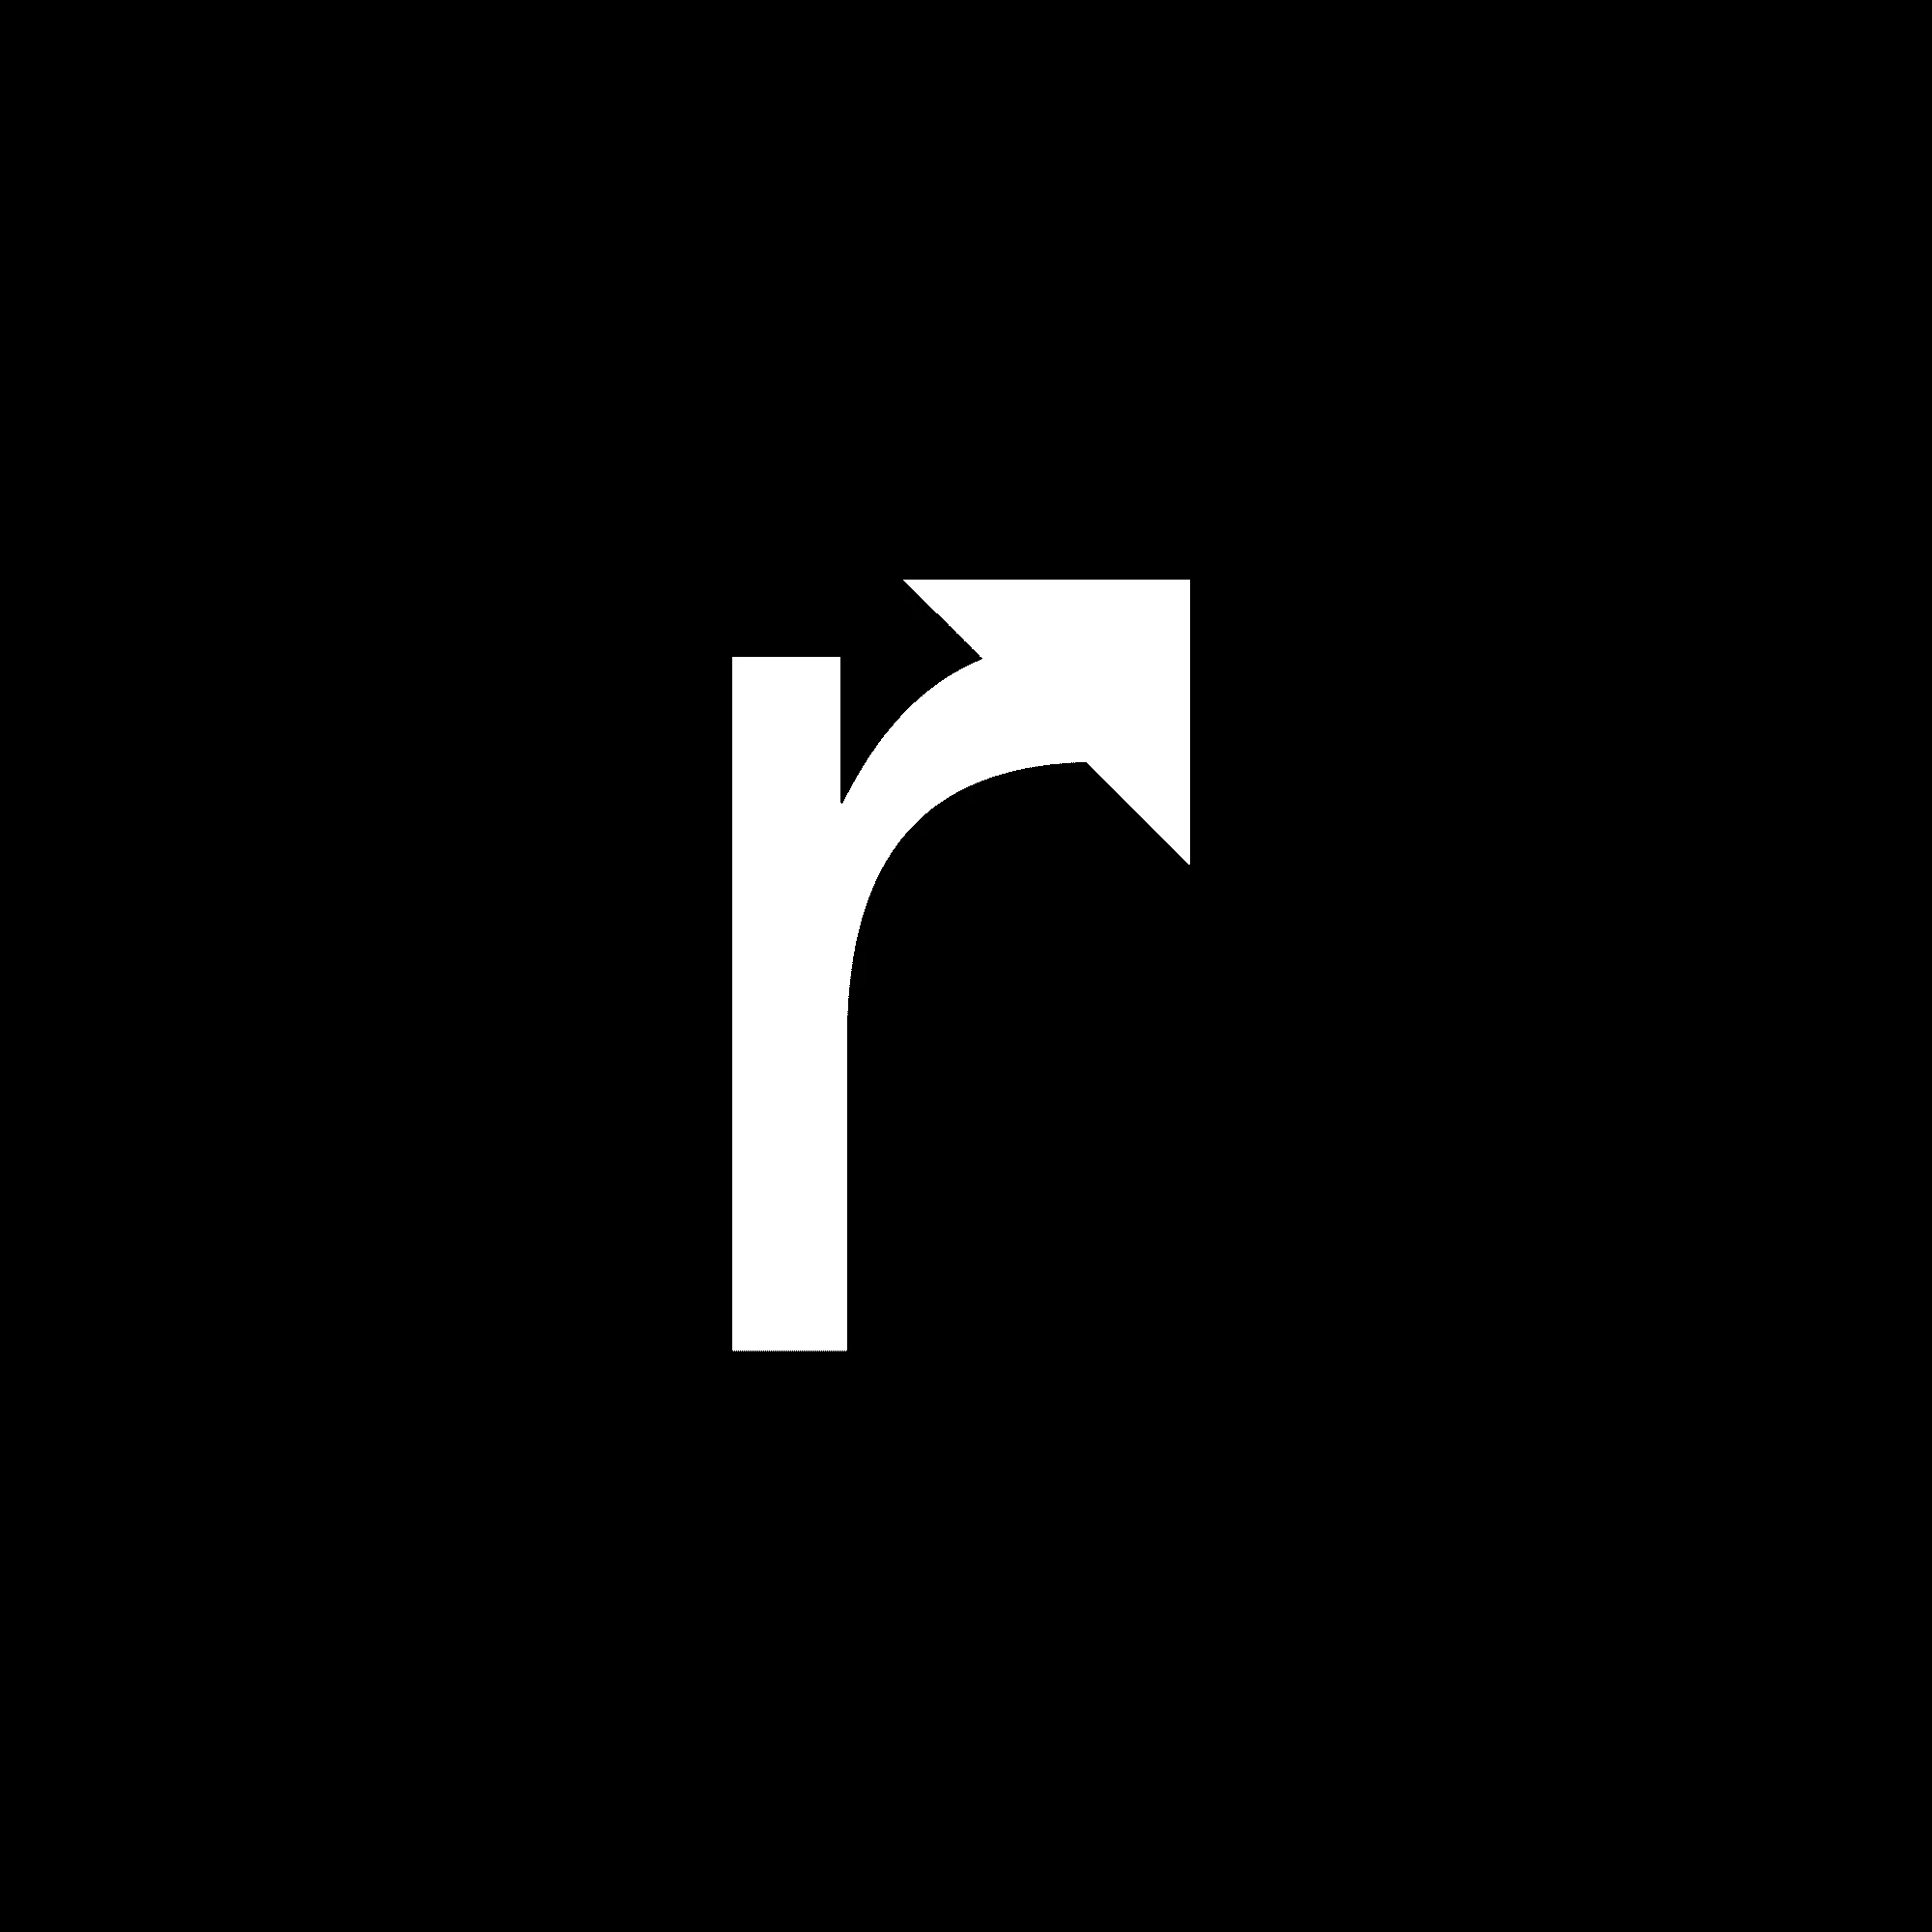 branding logo design "R" in the shape of an arrow